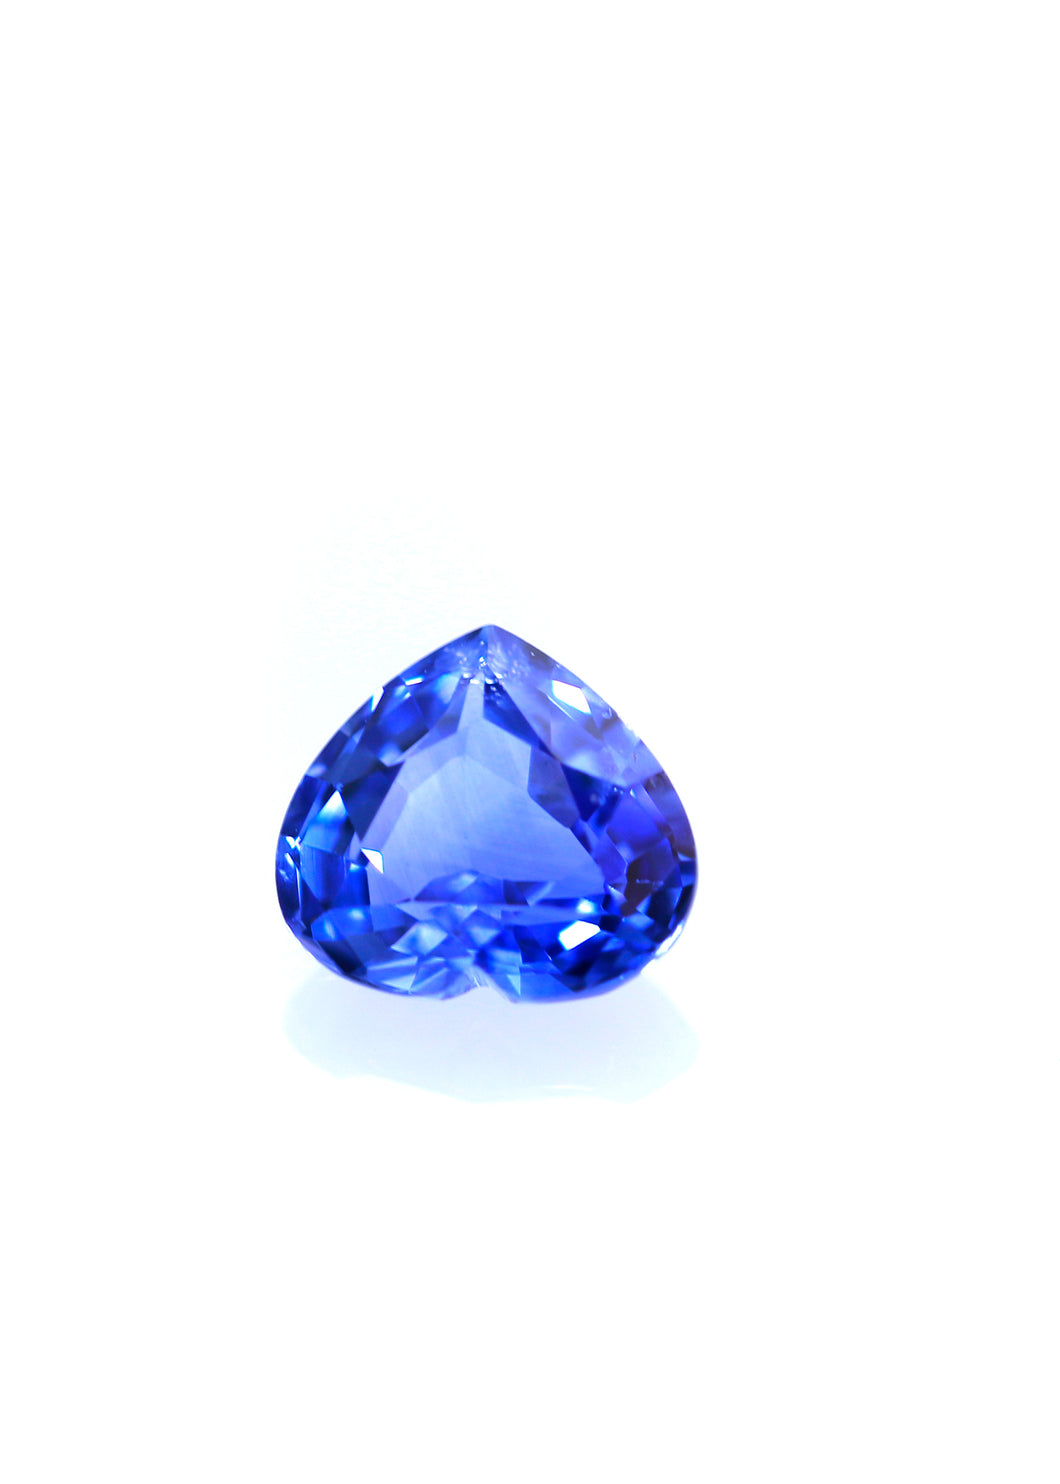 1.44ct Natural Blue Sapphire.